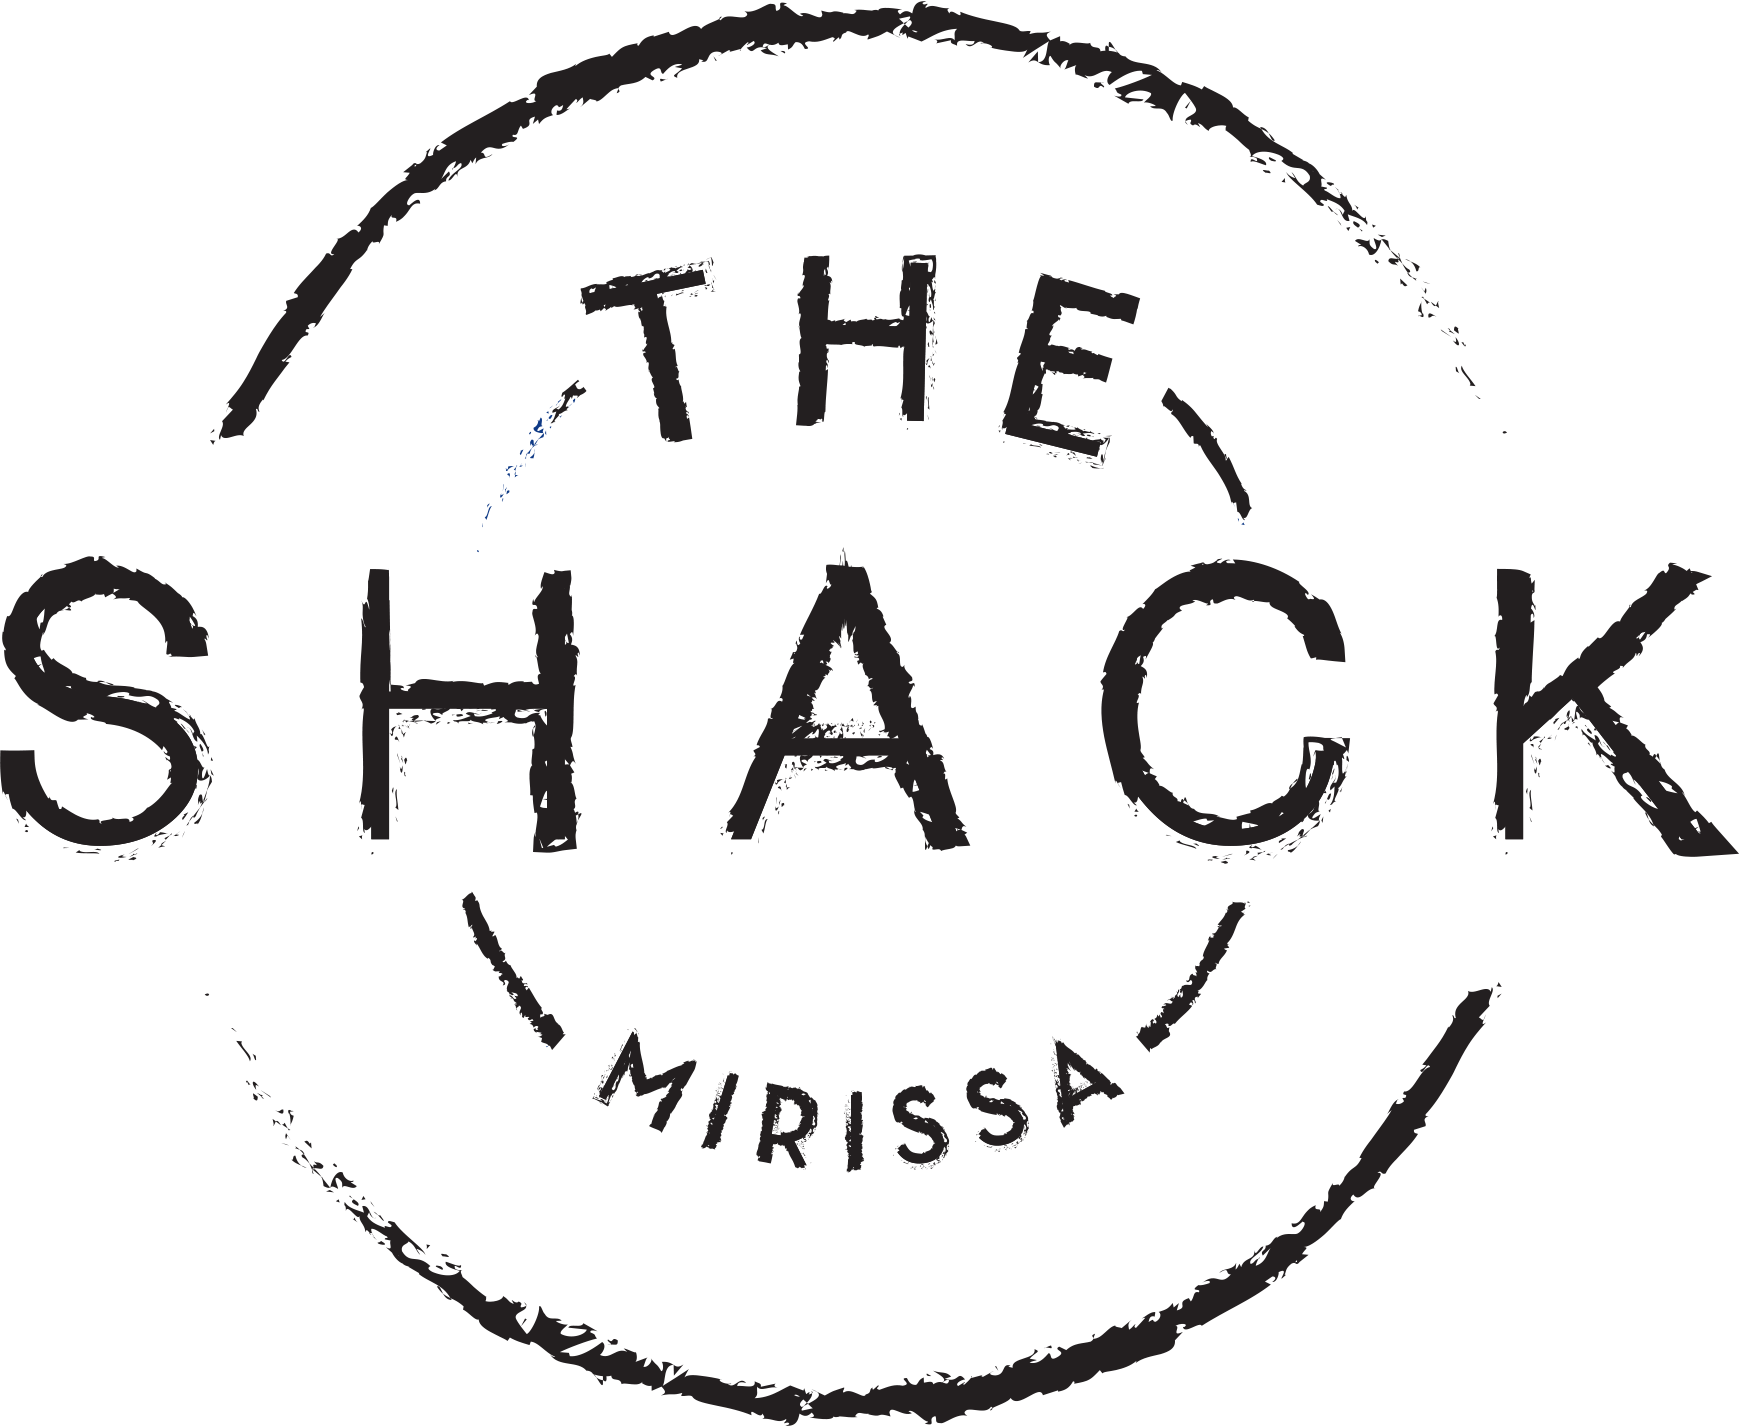 THE SHACK MIRISSA